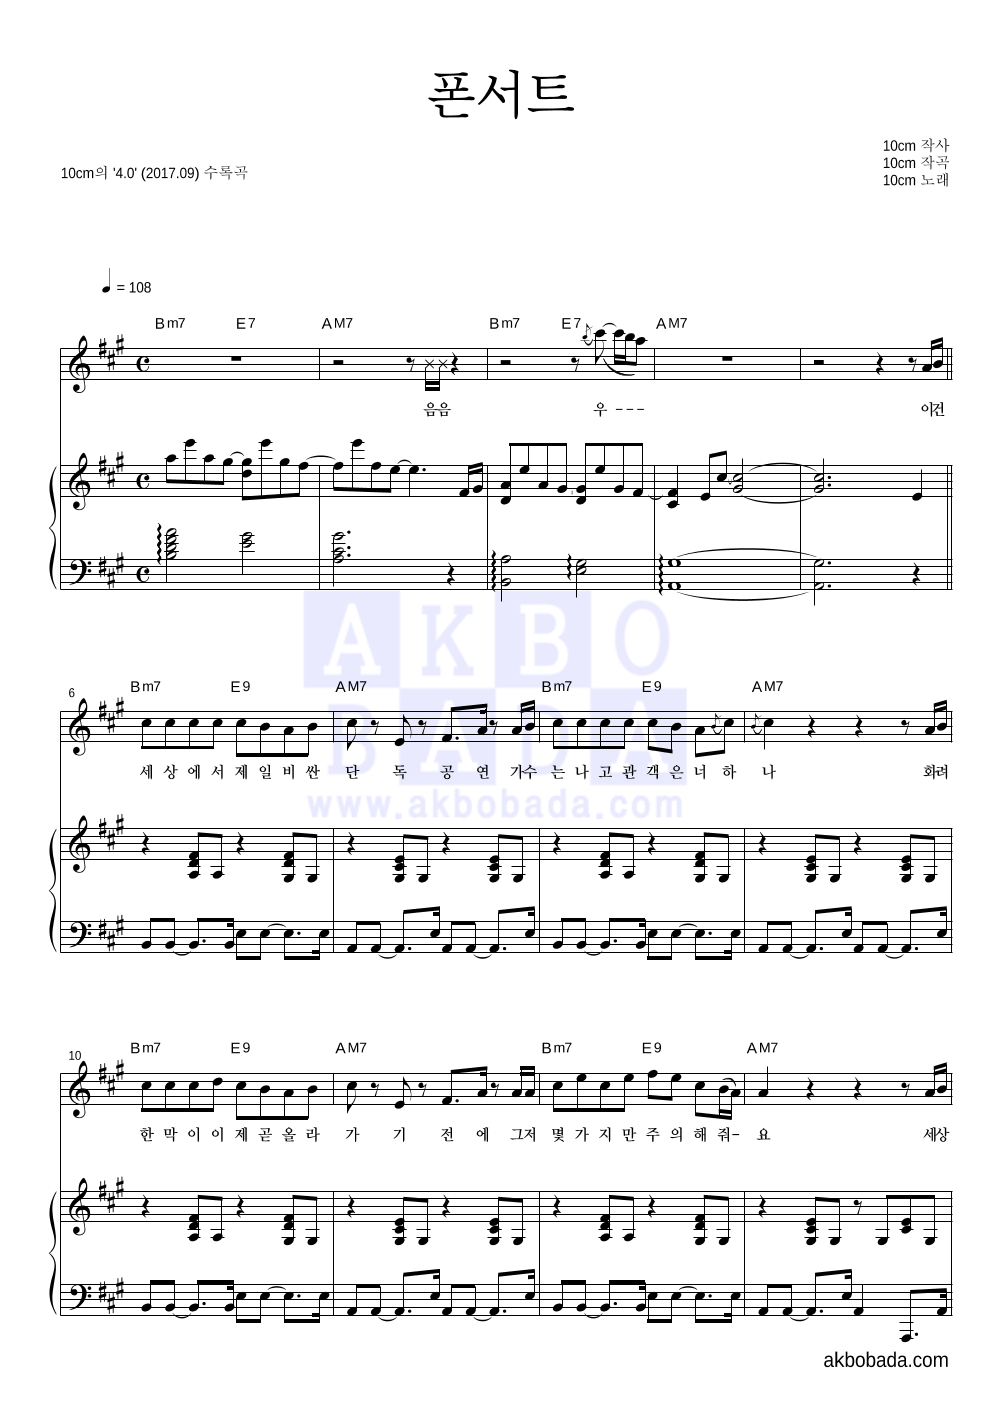 10CM - 폰서트 피아노 3단 악보 